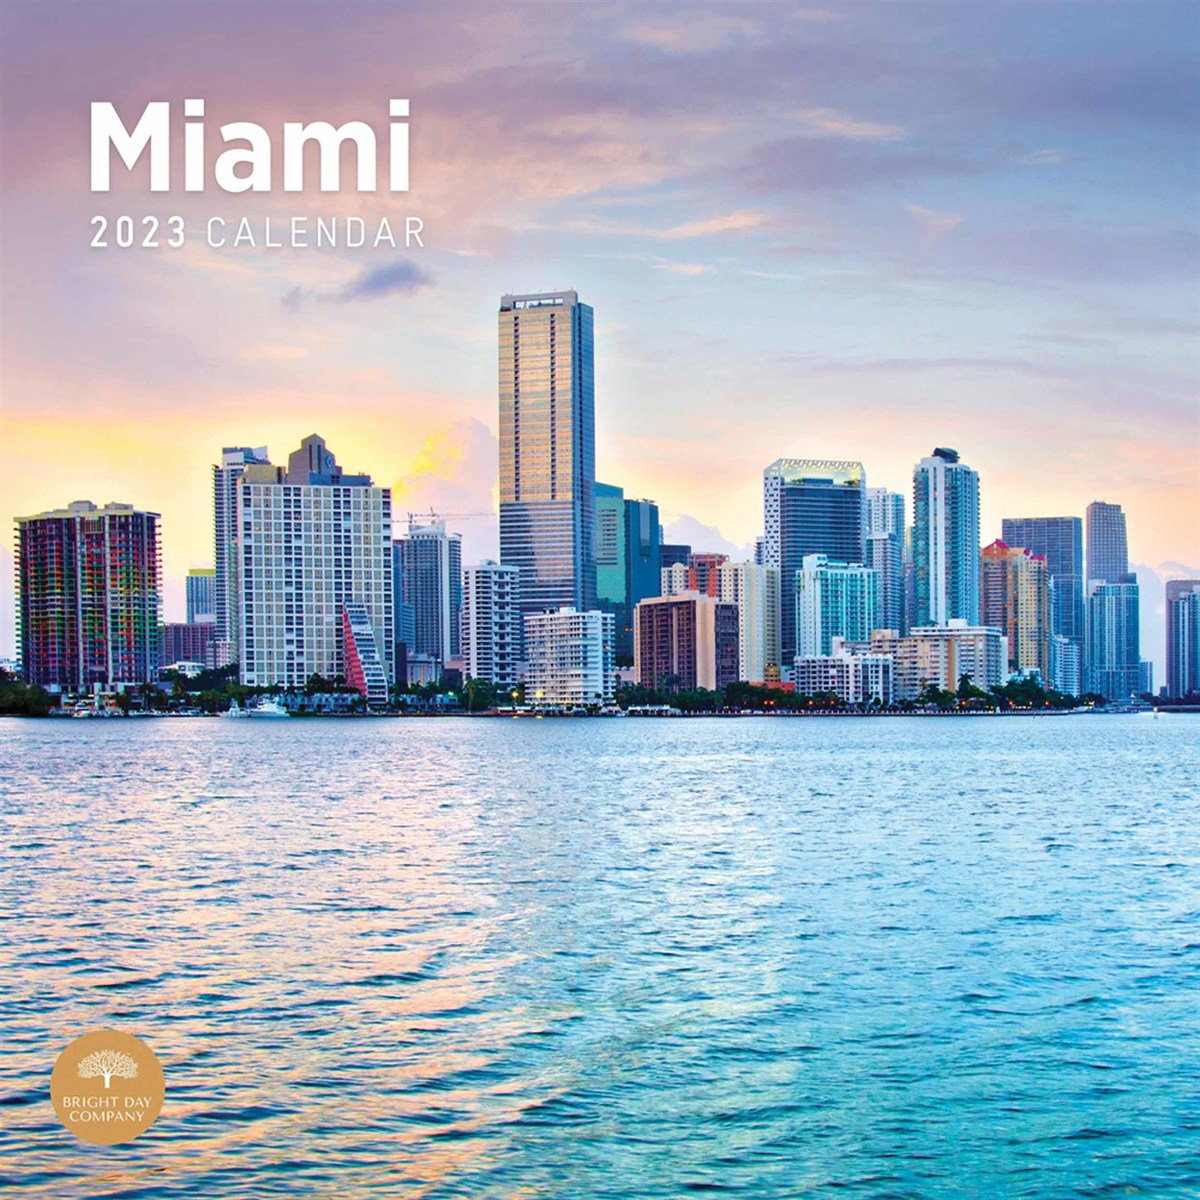 Miami 2023 Calendars